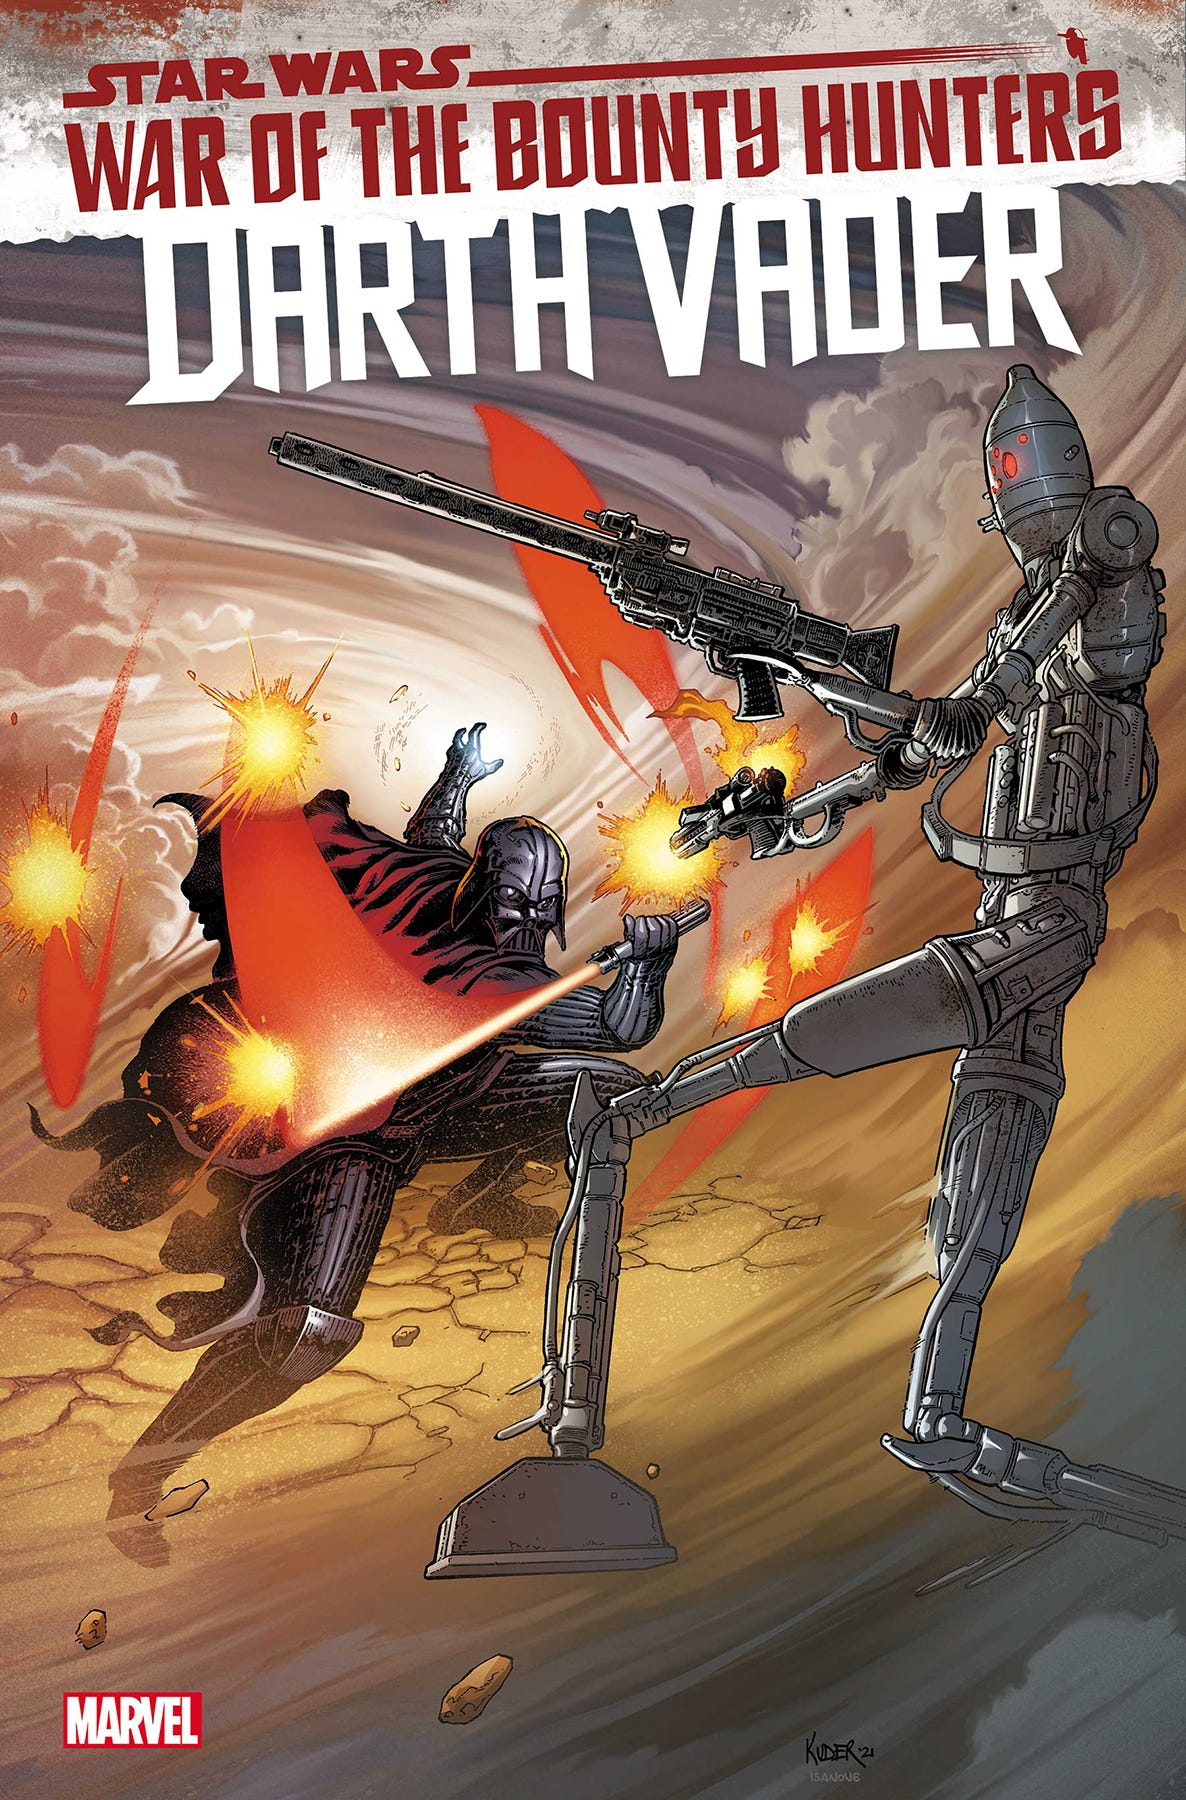 Star Wars Darth Vader #13 War of the Bounty Hunters